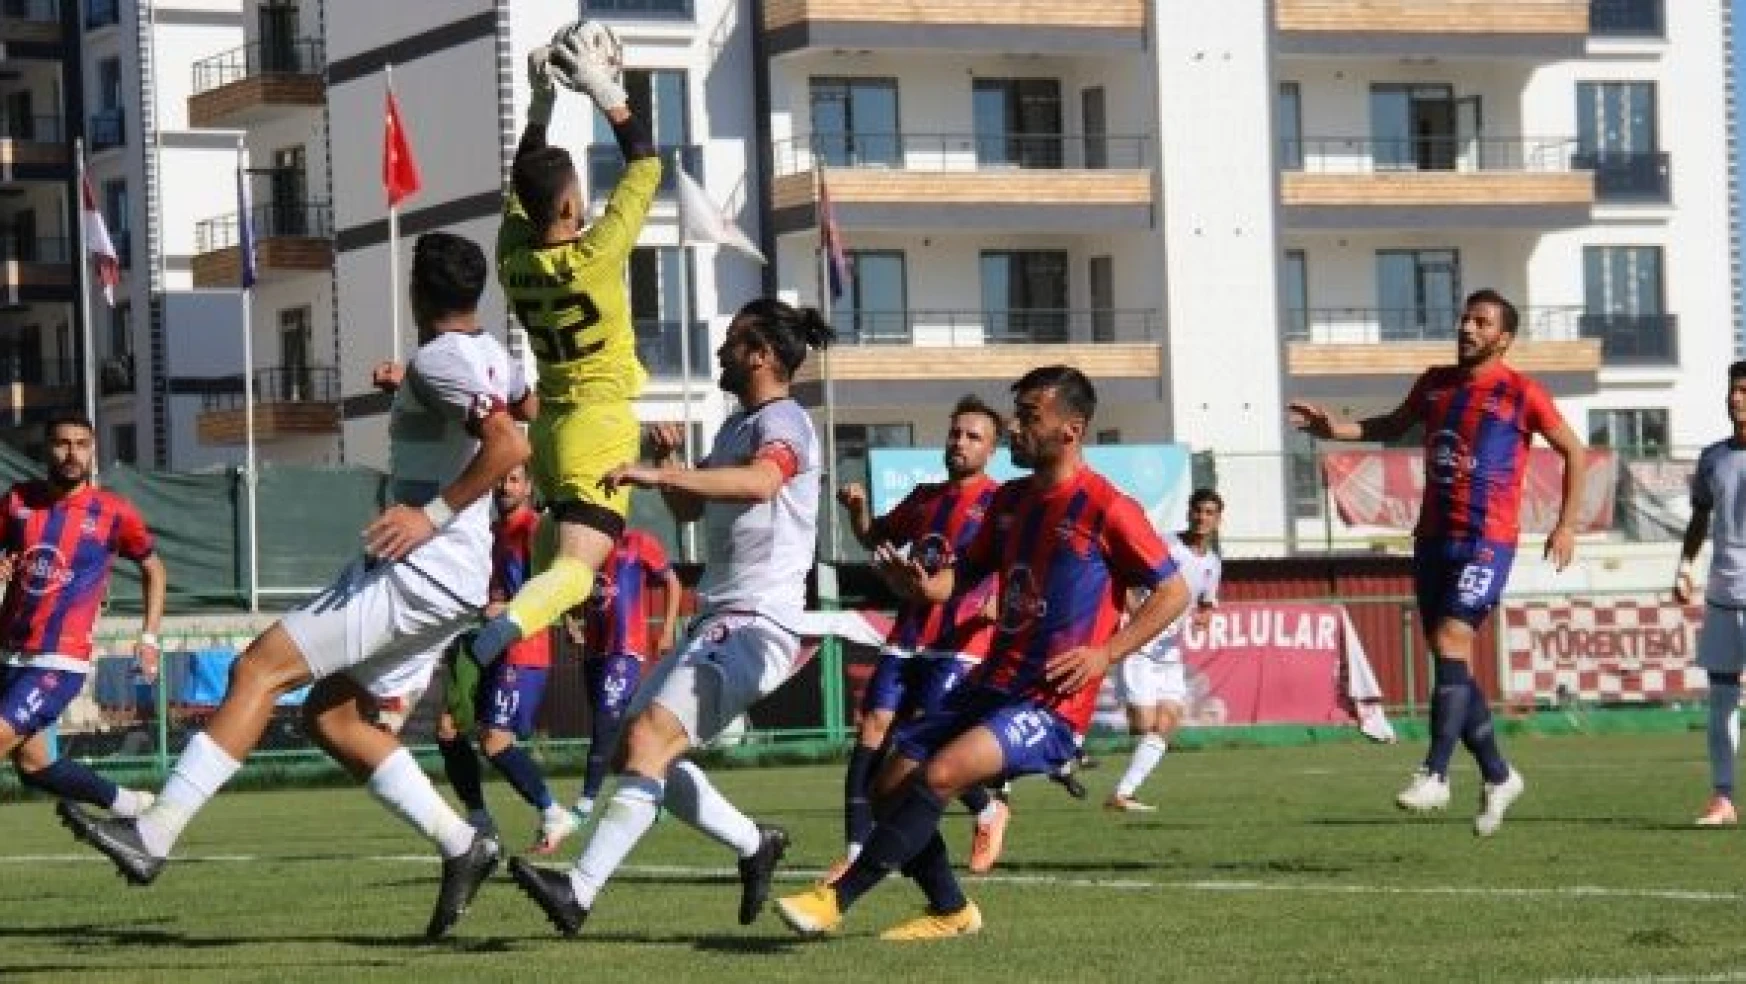 TFF 3. Lig: Elazığspor: 1 - Kahta 02 Spor: 0